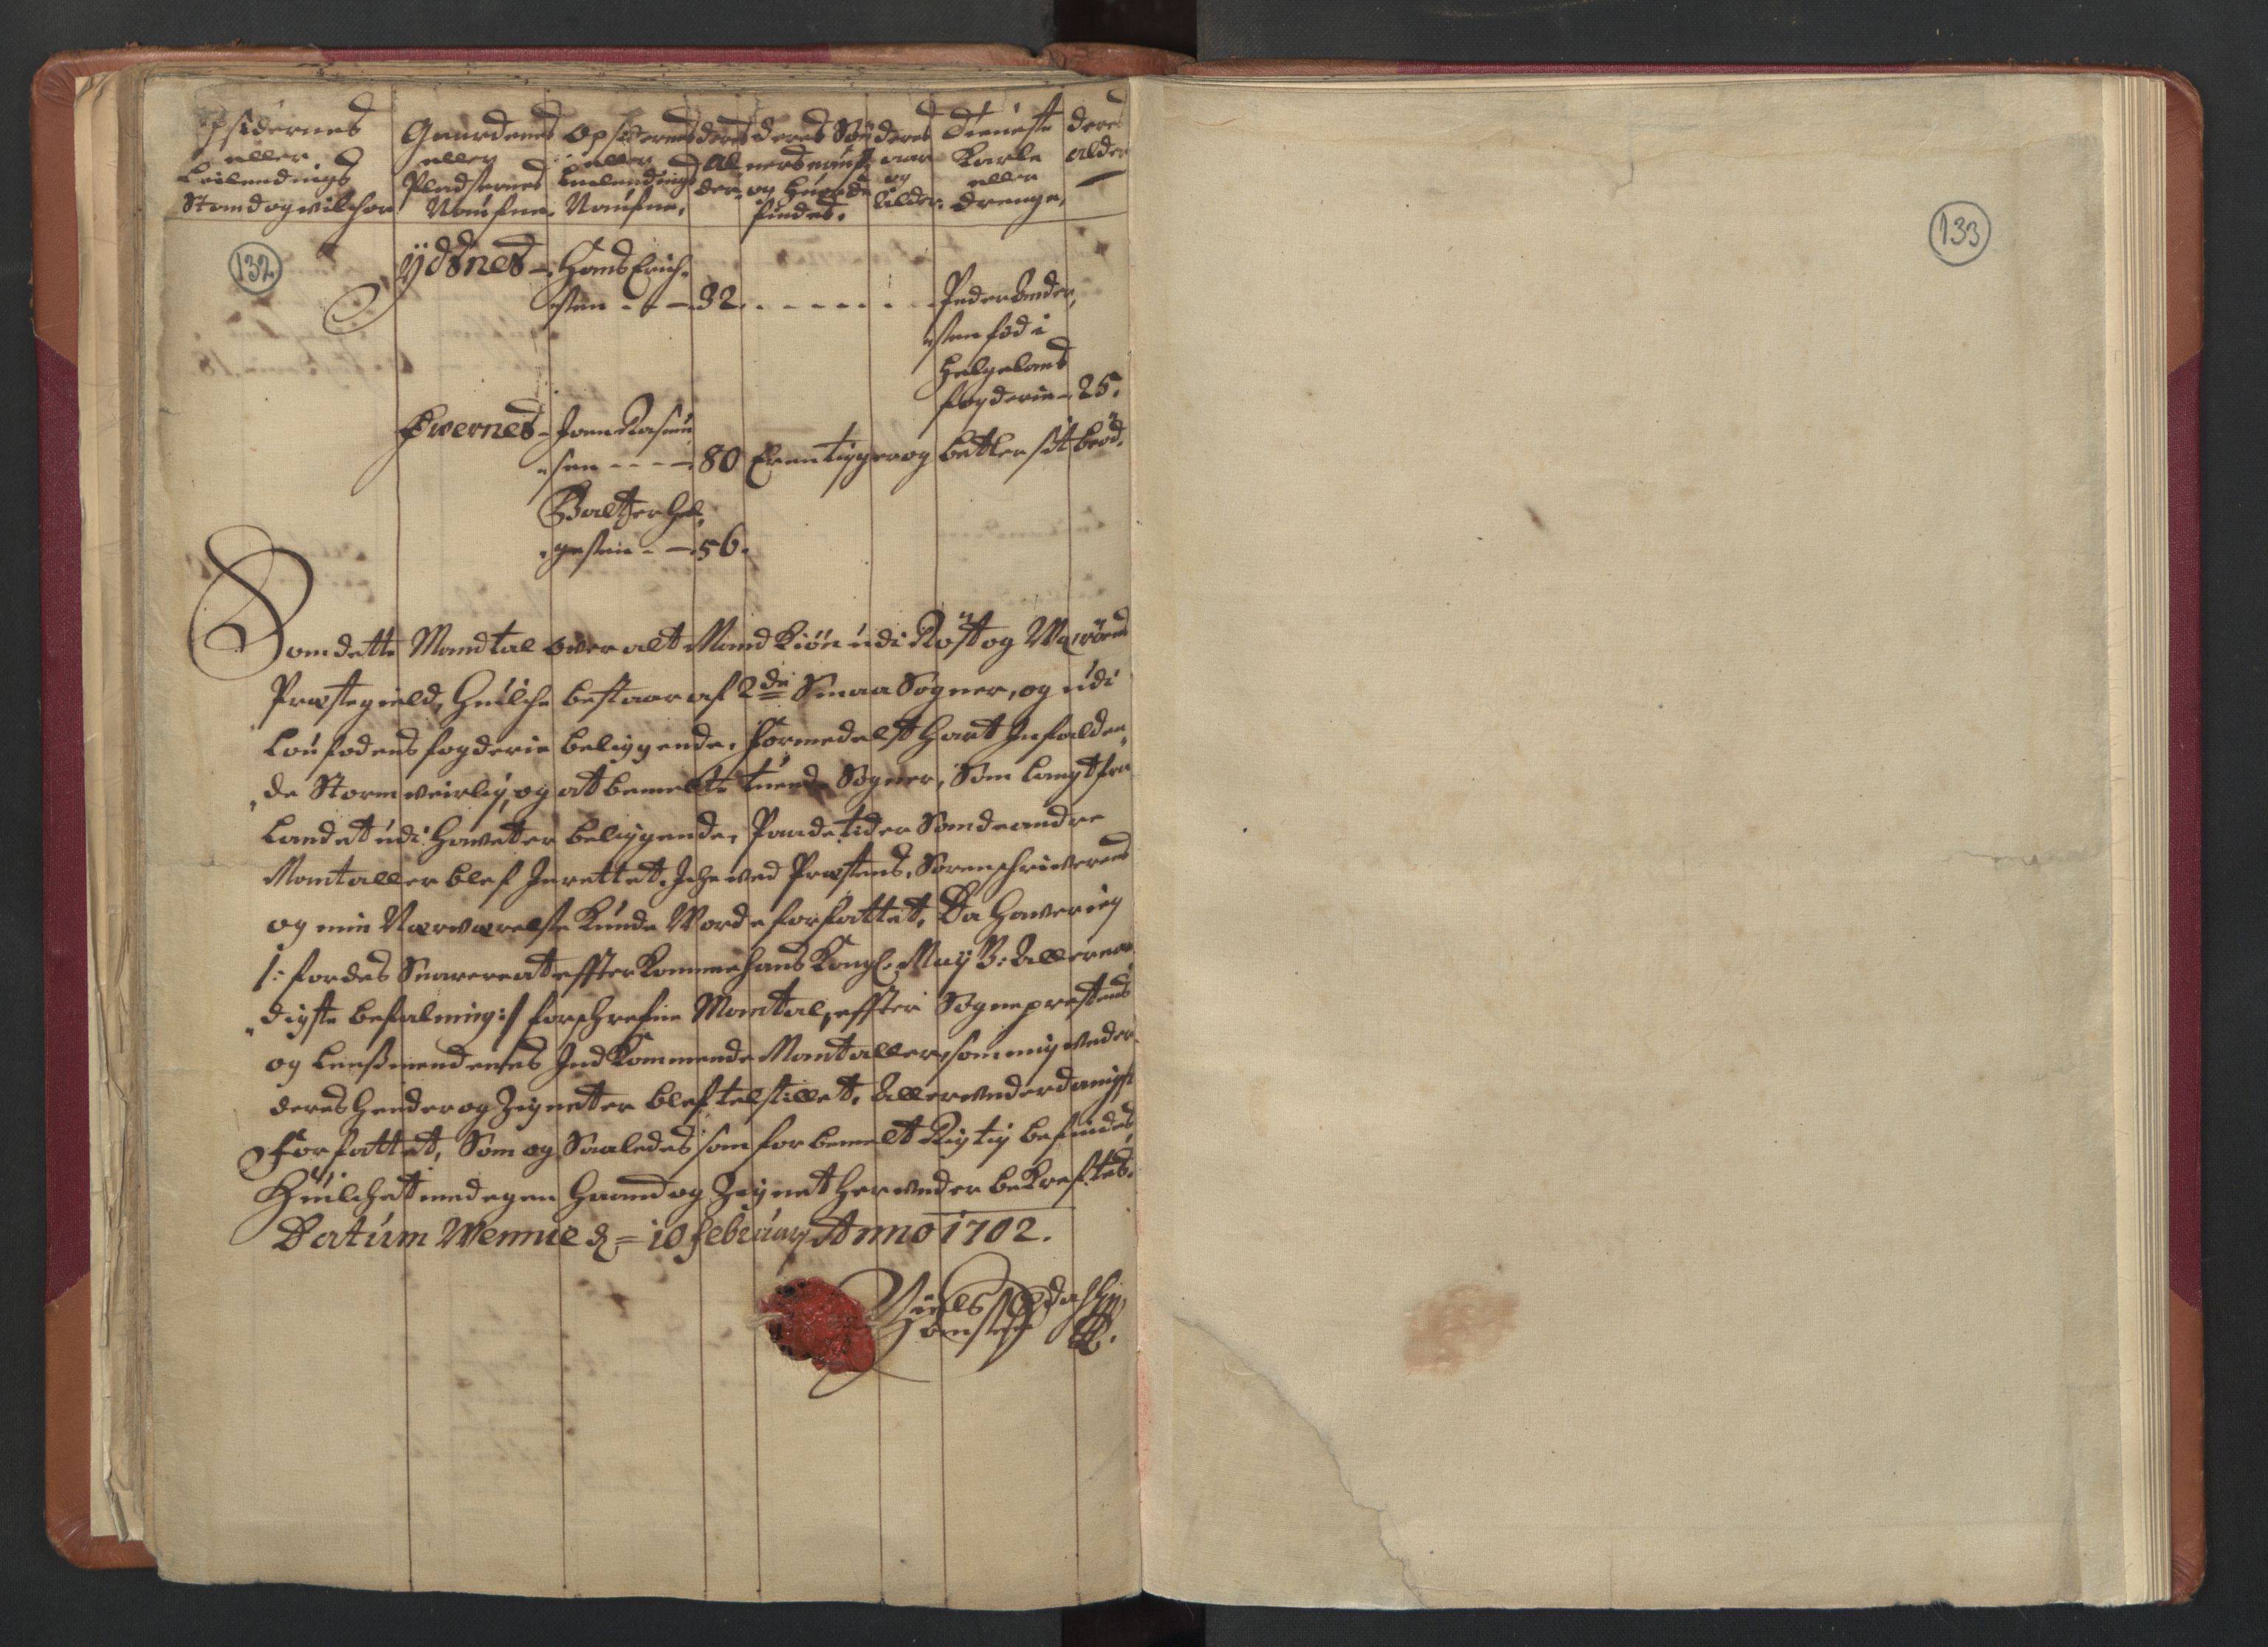 RA, Manntallet 1701, nr. 18: Vesterålen, Andenes og Lofoten fogderi, 1701, s. 132-133